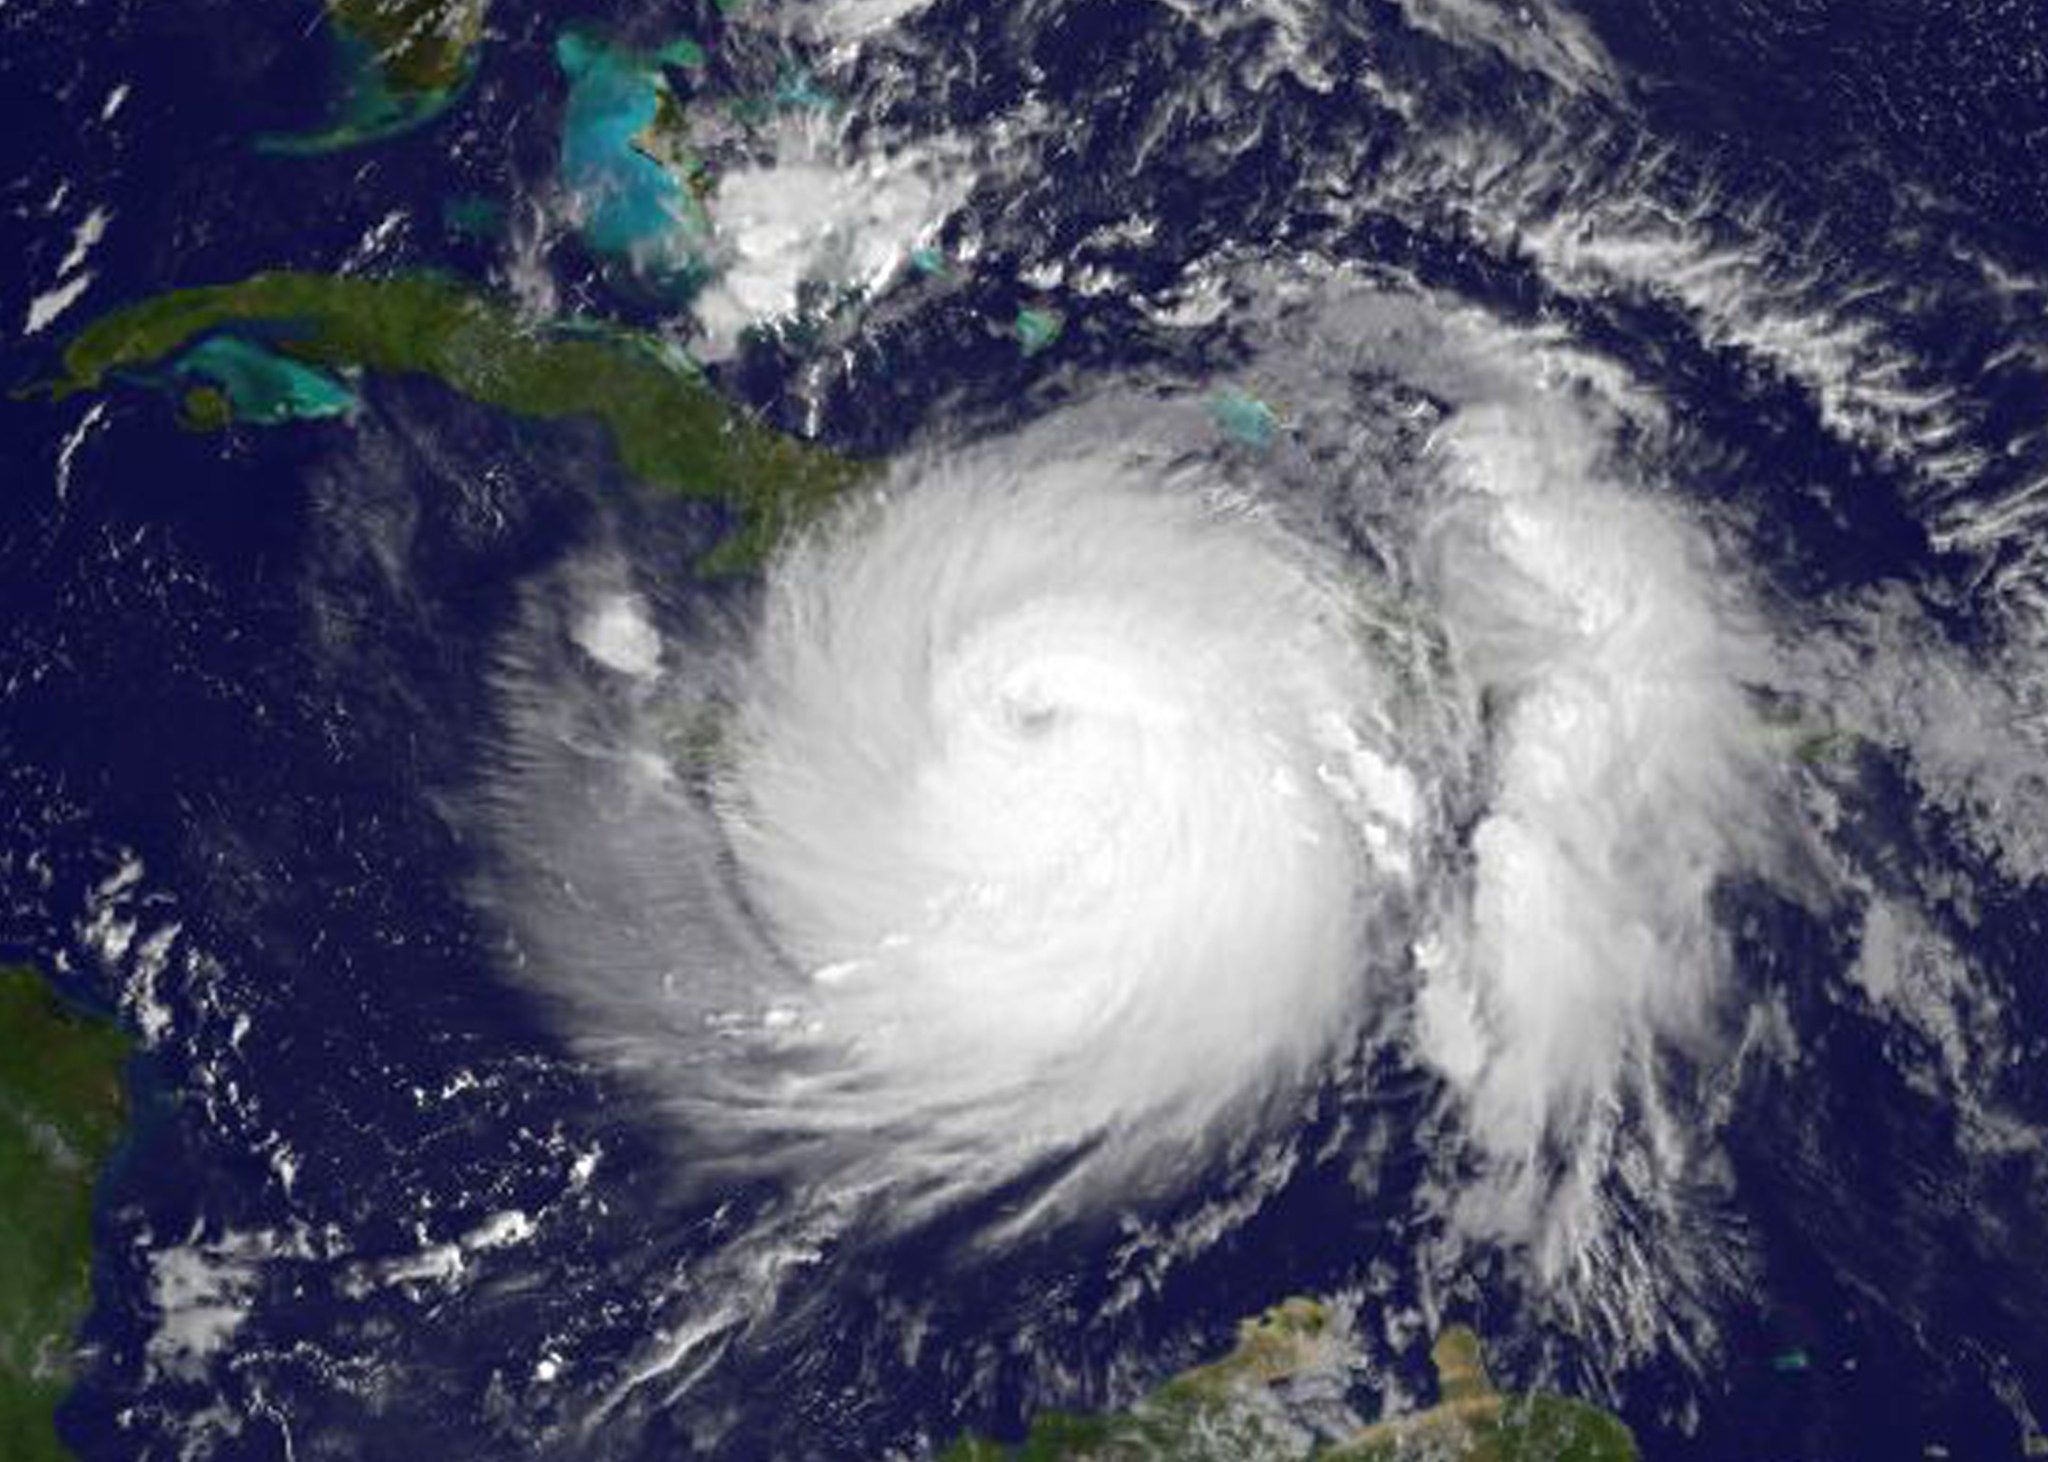 visible-light image of Hurricane Matthew